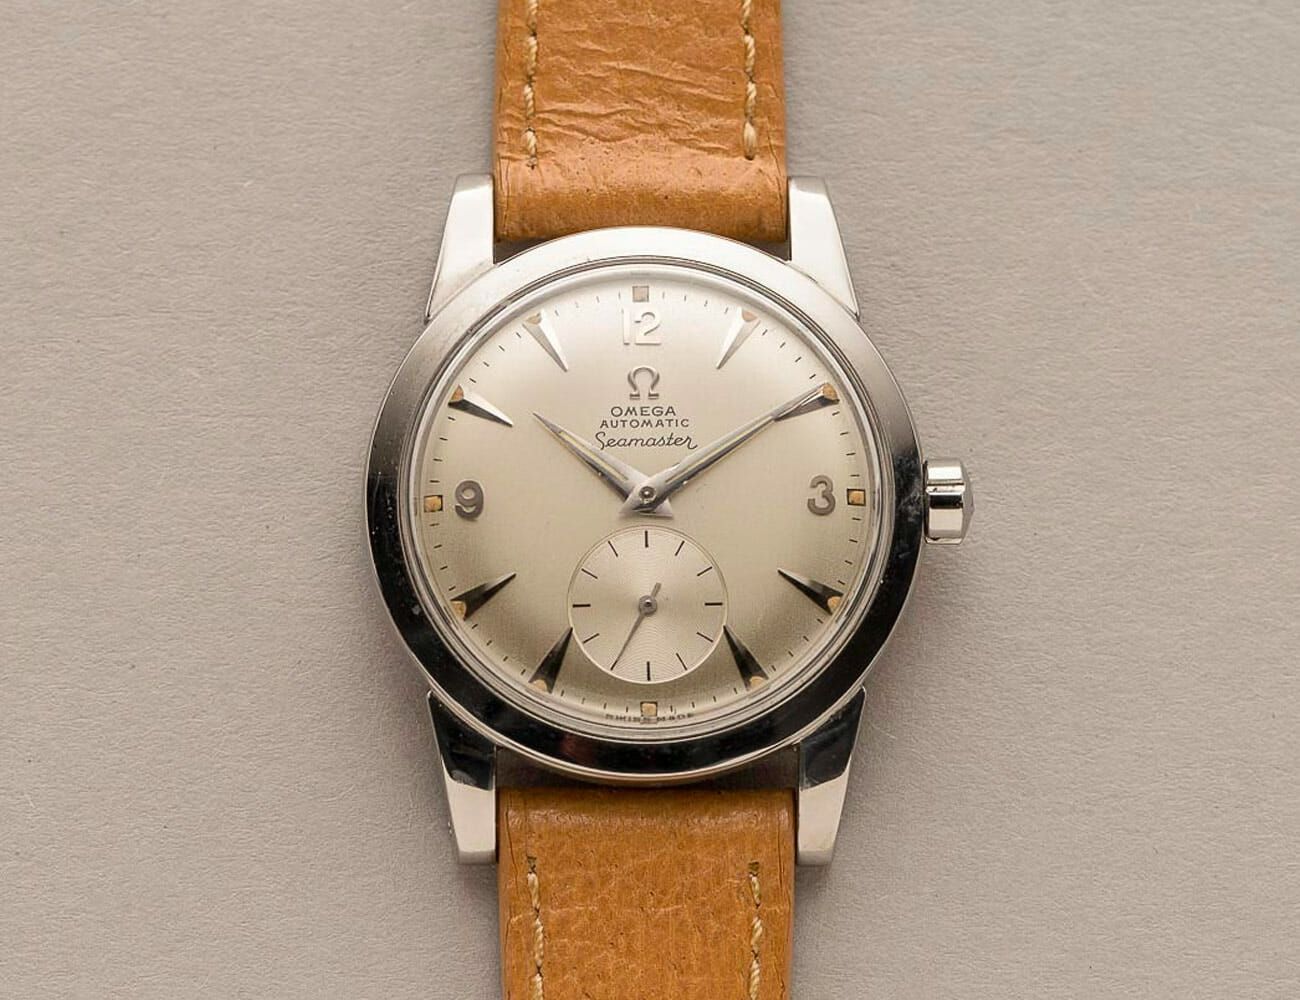 vintage omega seamaster watch